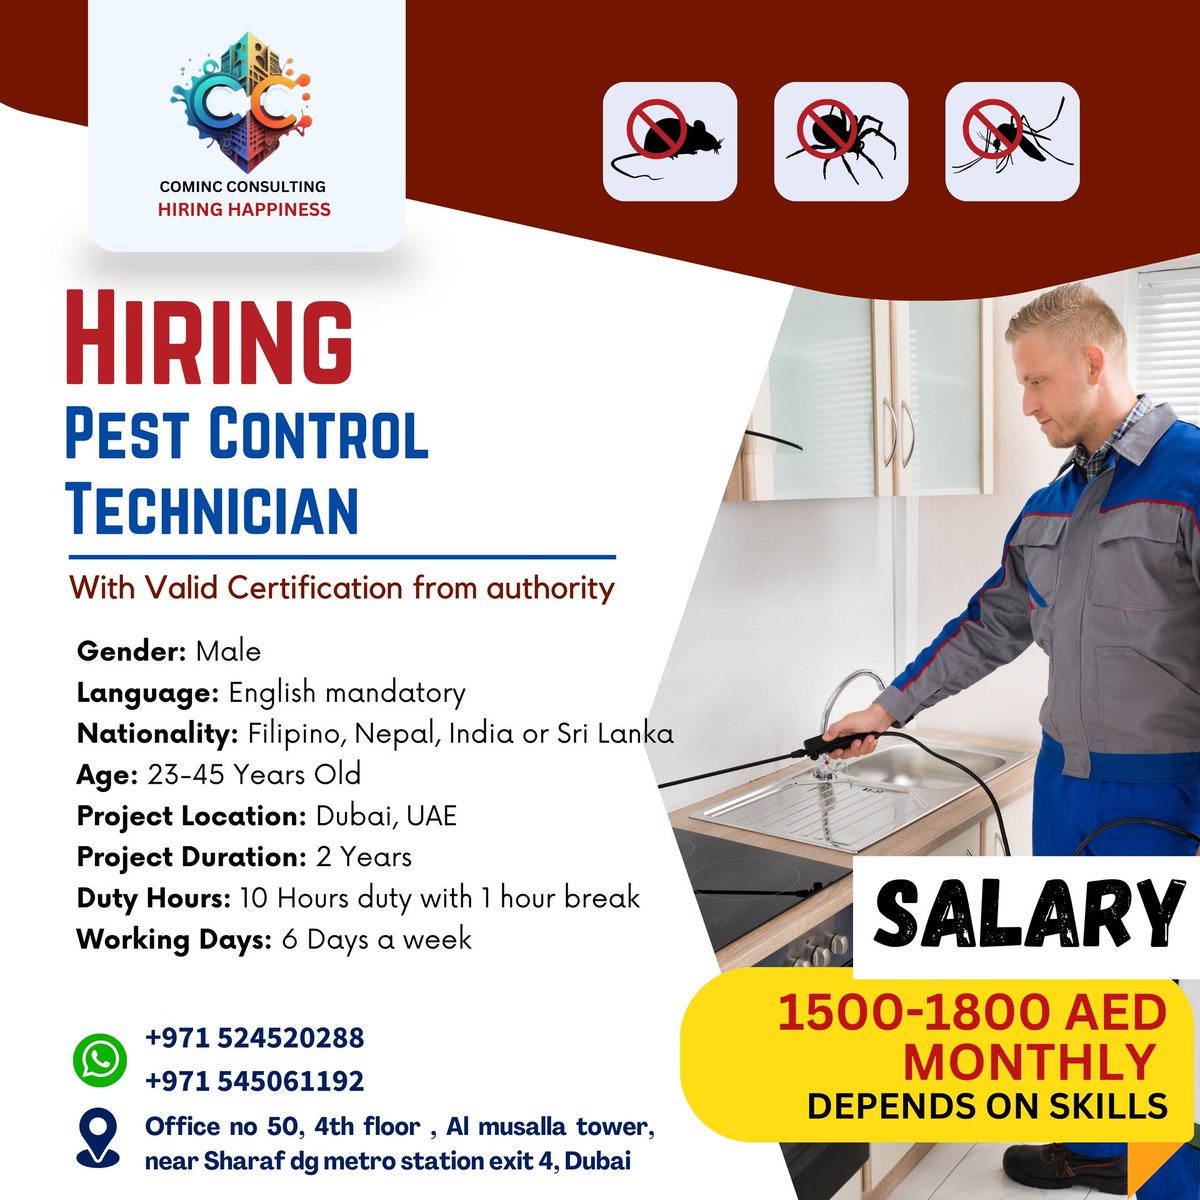 Hiring: Pest Control Technician

#dubaijobs #dubai #jobs #uaejobs #uae #jobsindubai #jobsearch #job #jobsinuae #gulfjobs #abudhabijobs #recruitment #dubailife #abudhabi